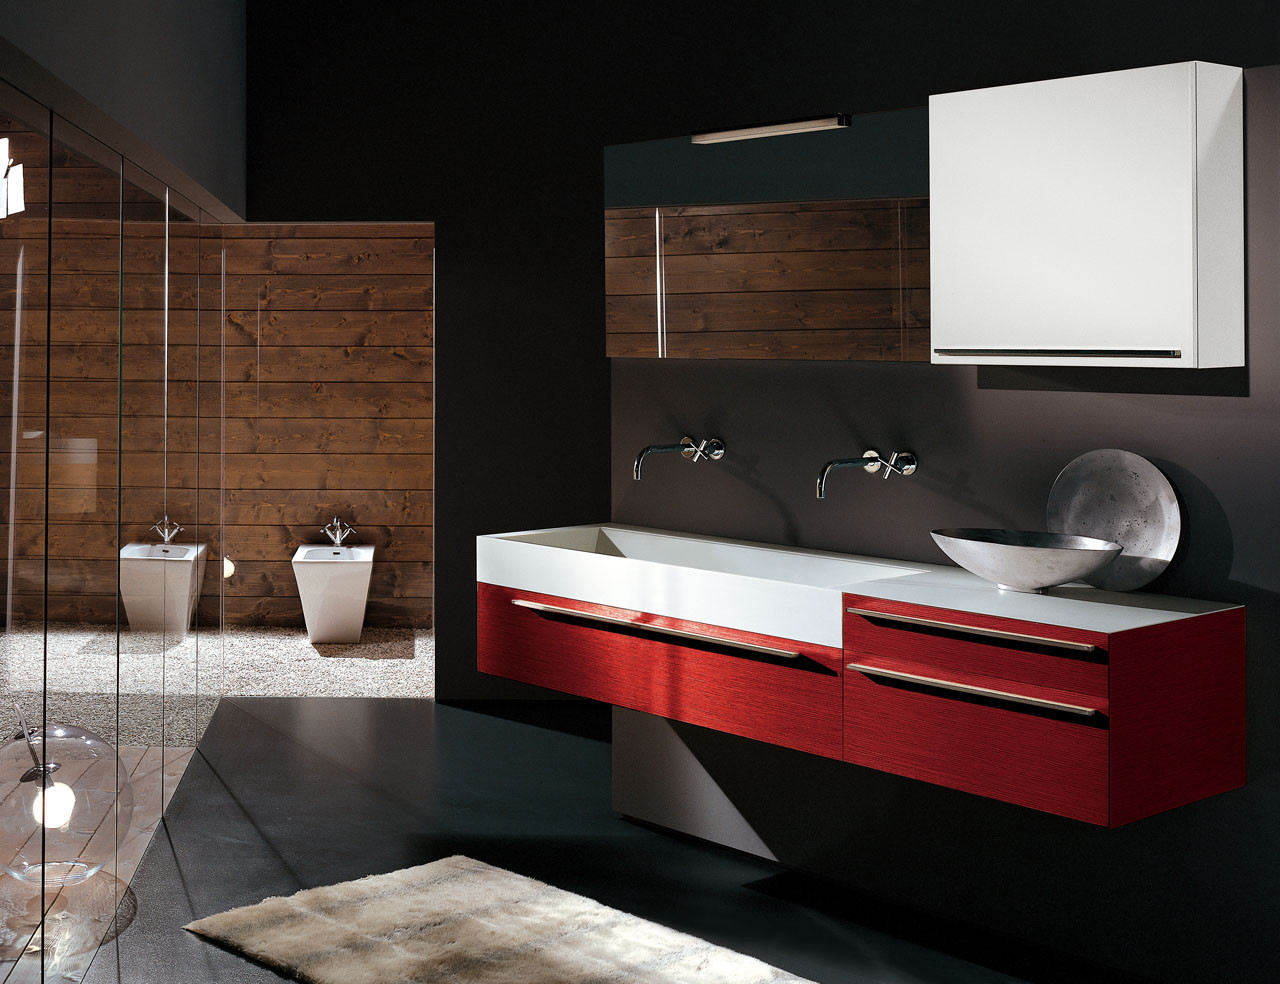 Red Bathroom Decor
 25 Best Ideas For Creating A Contemporary Bathroom